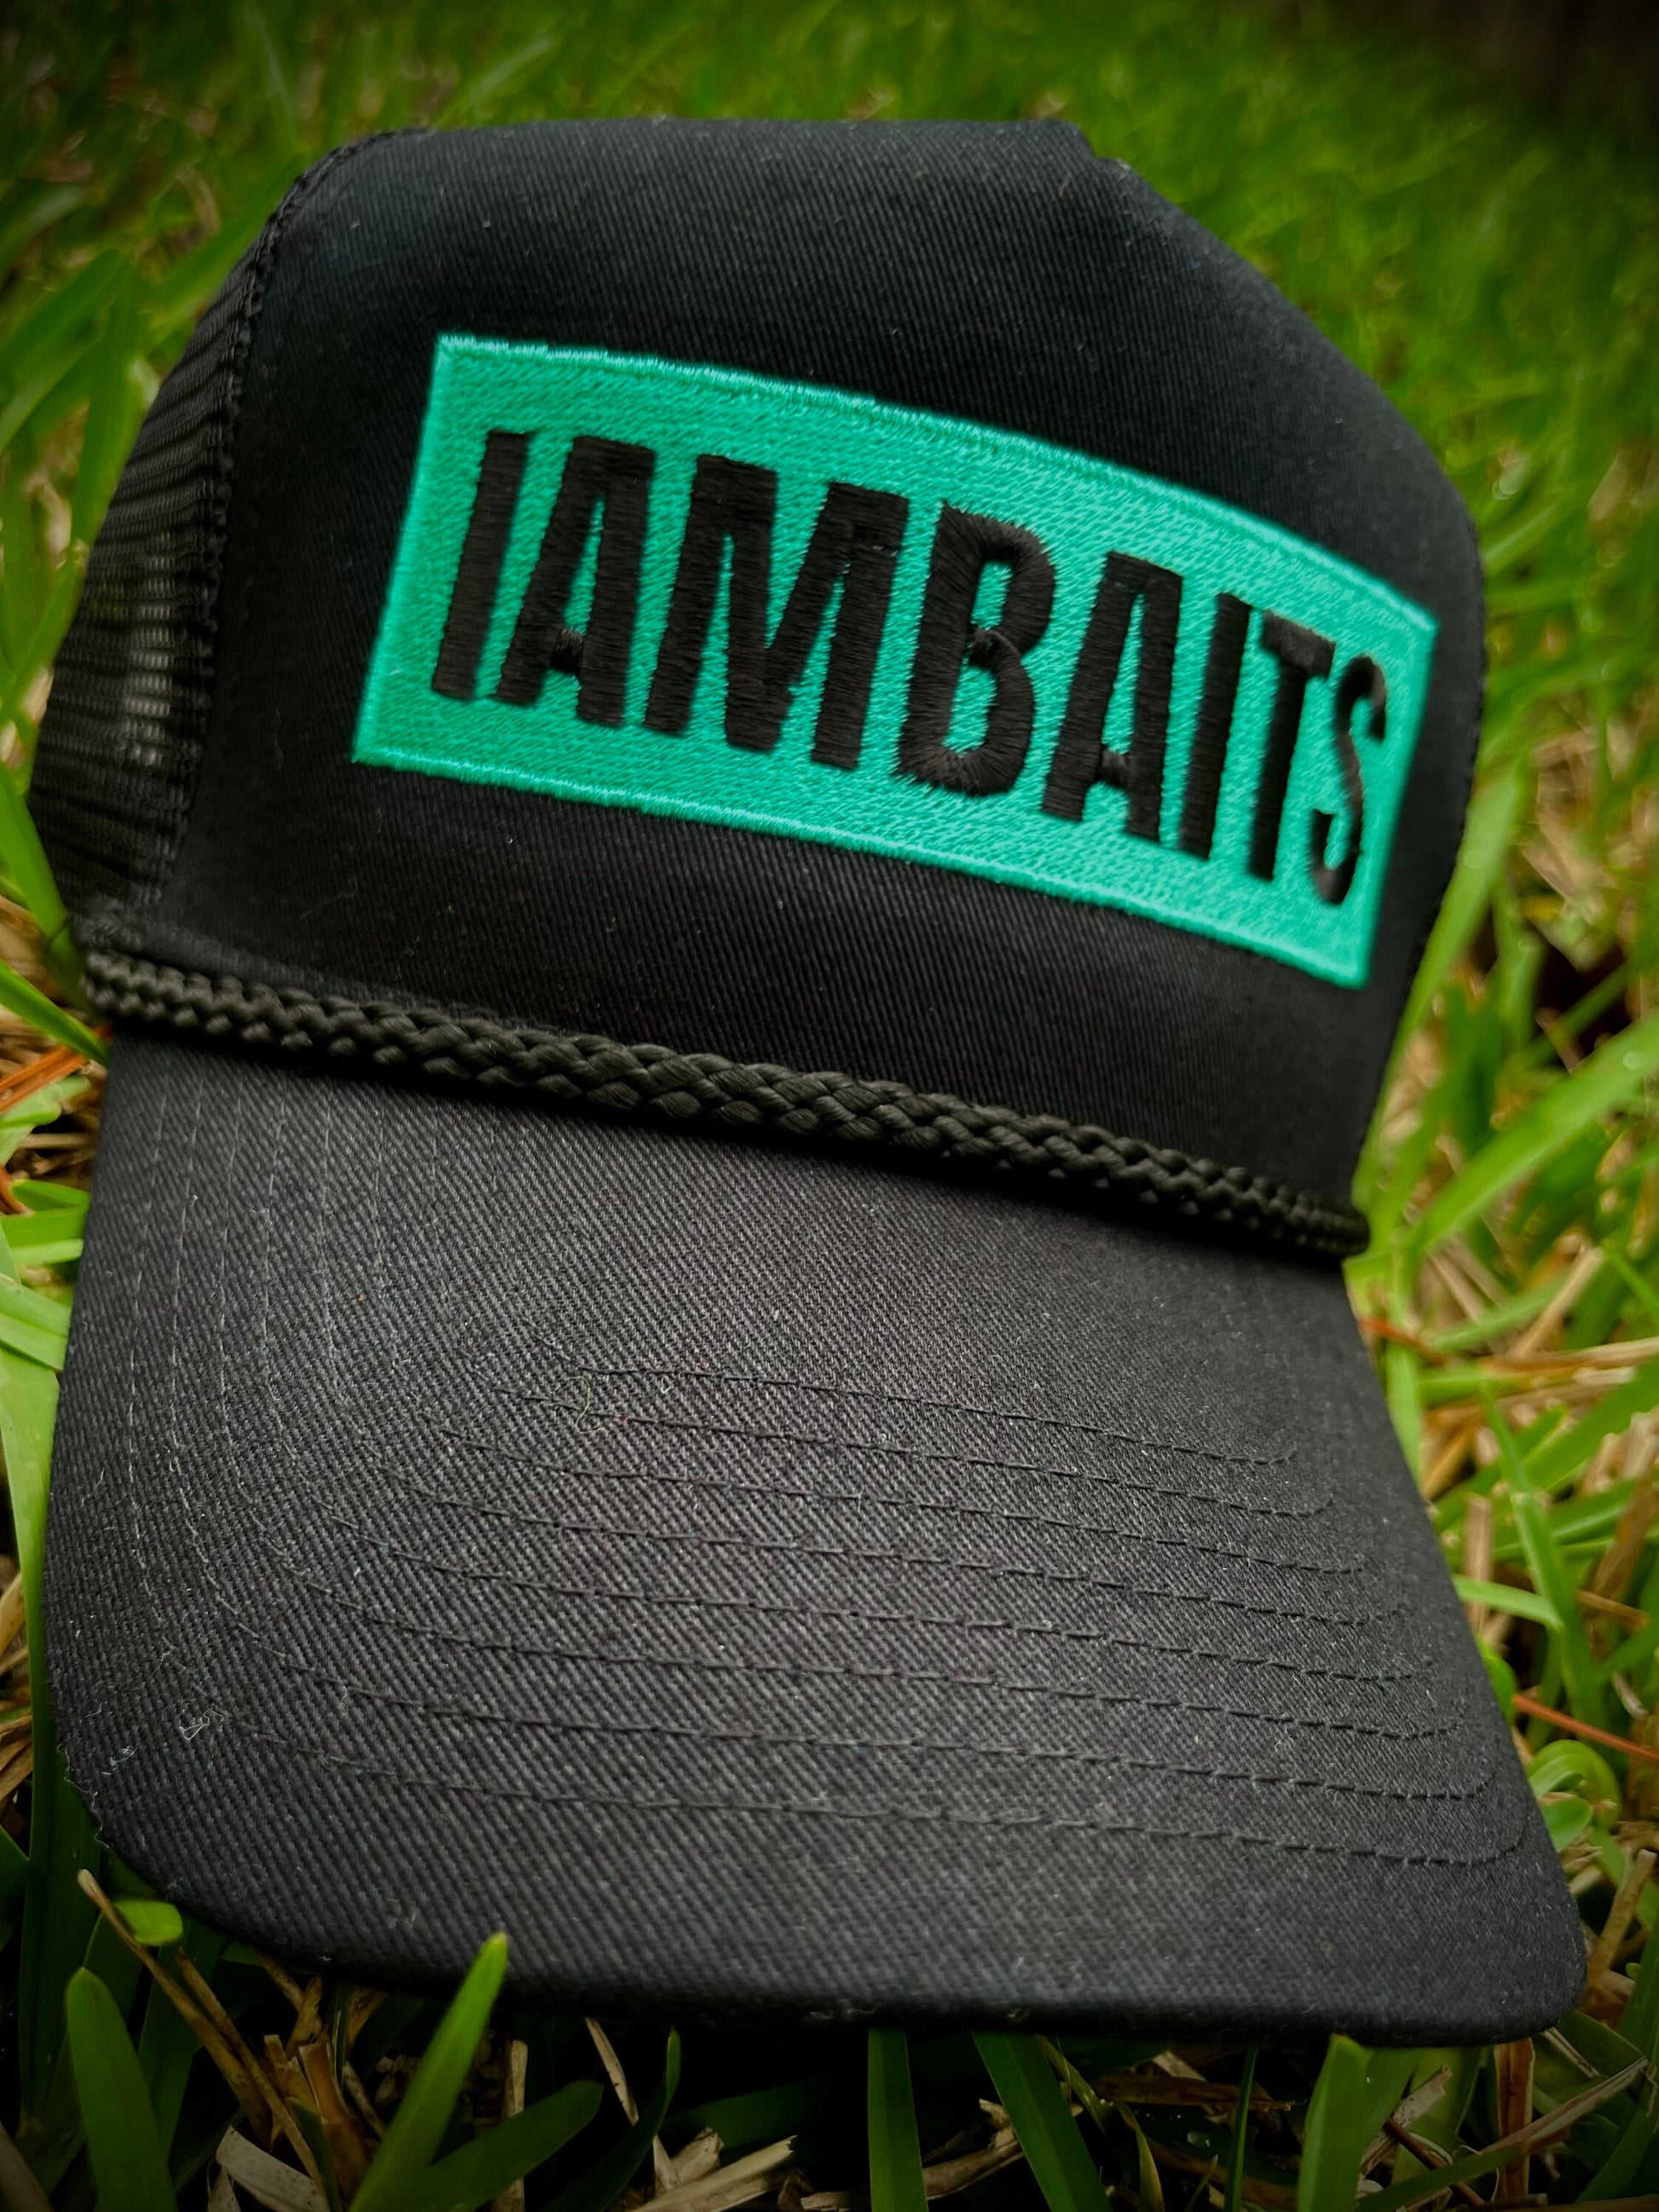 IAMBAITS: Teal and black trucker hat